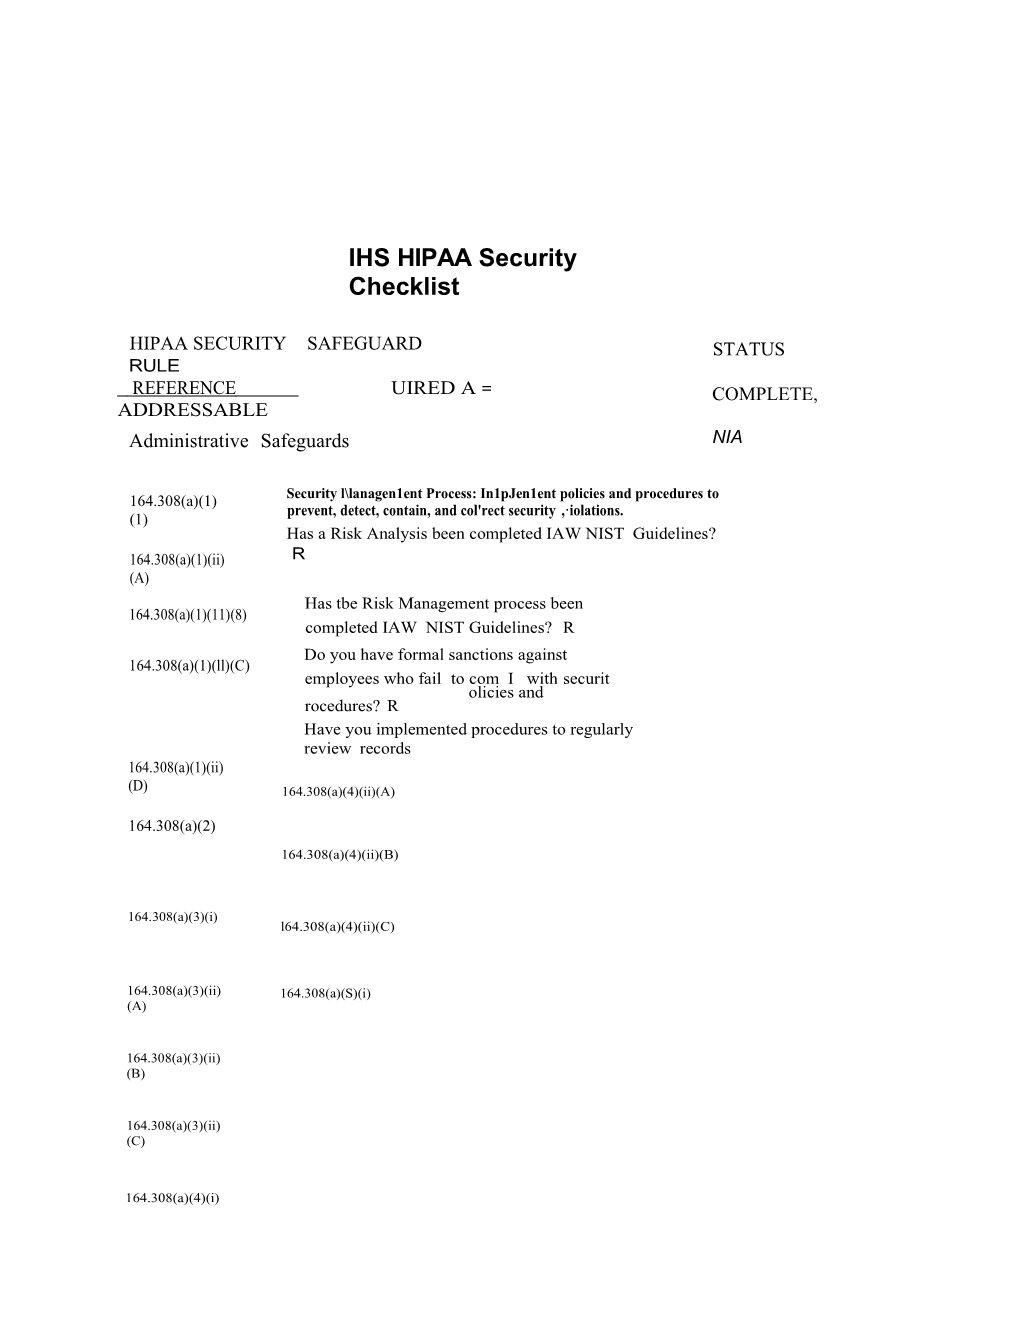 IHS HIPAA Security Checklist